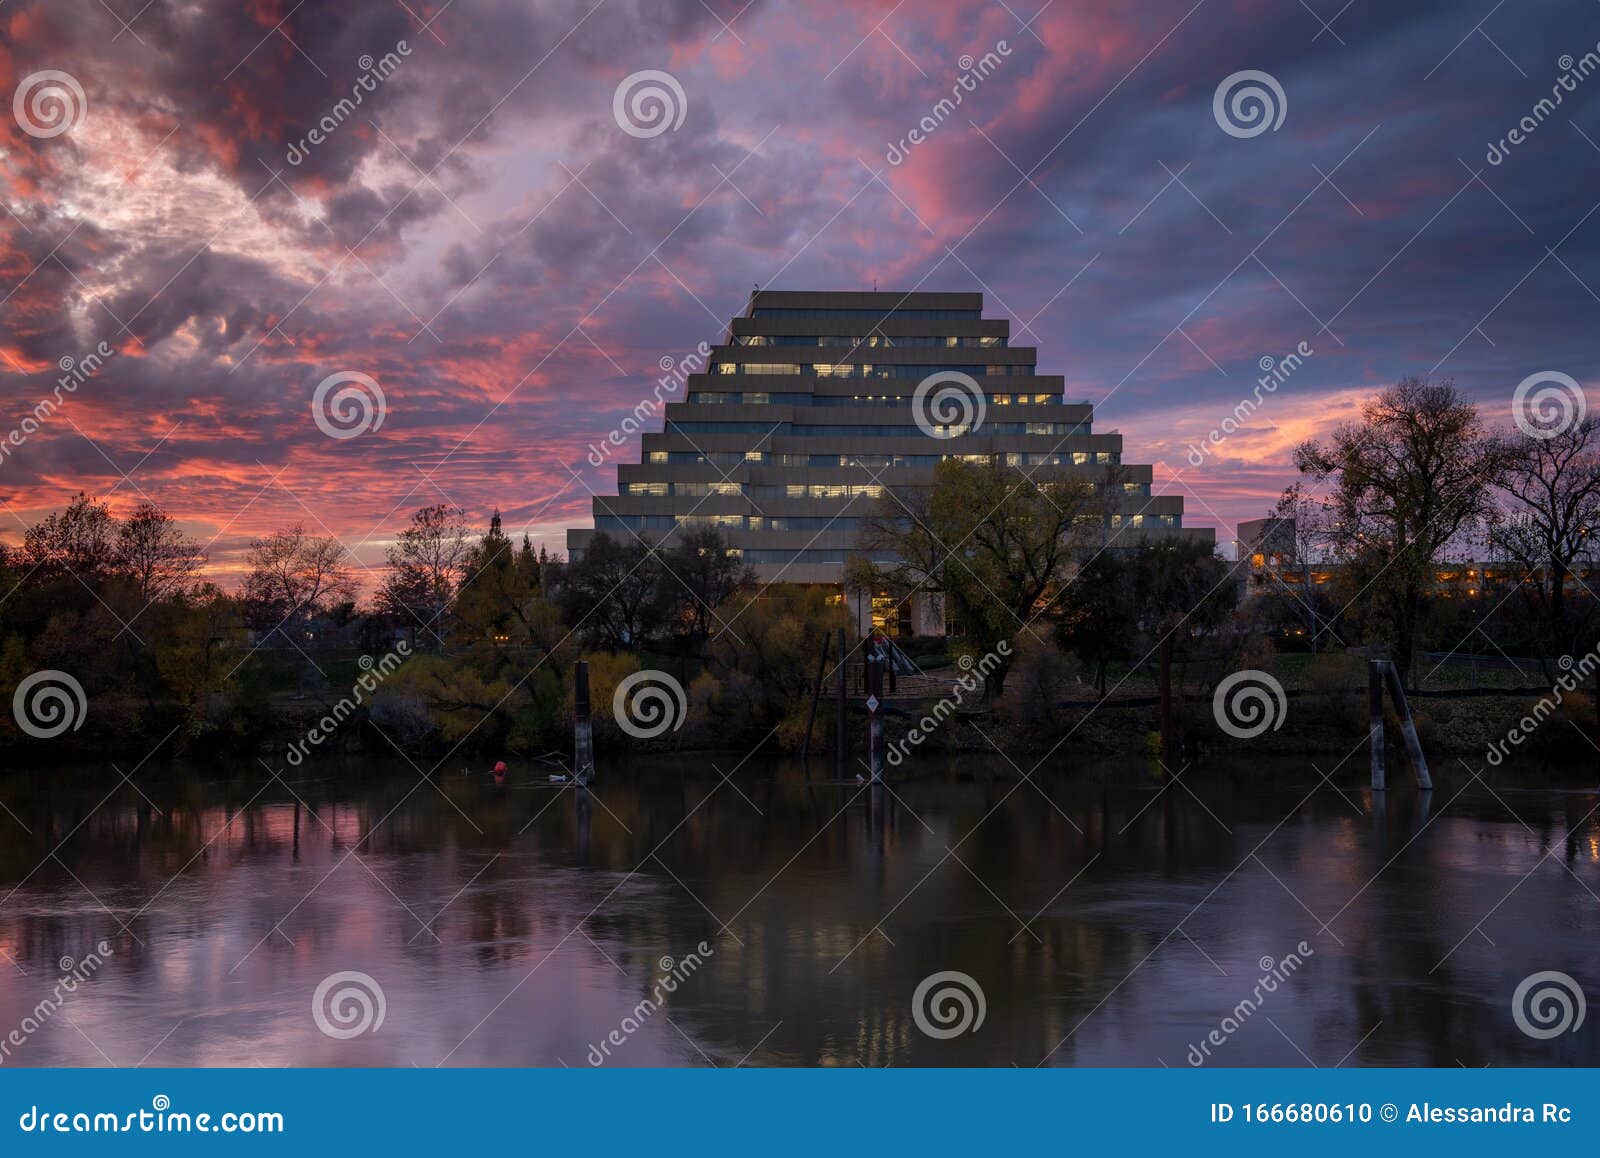 the-ziggurat-building-at-the-riverfront-park-in-west-sacramento